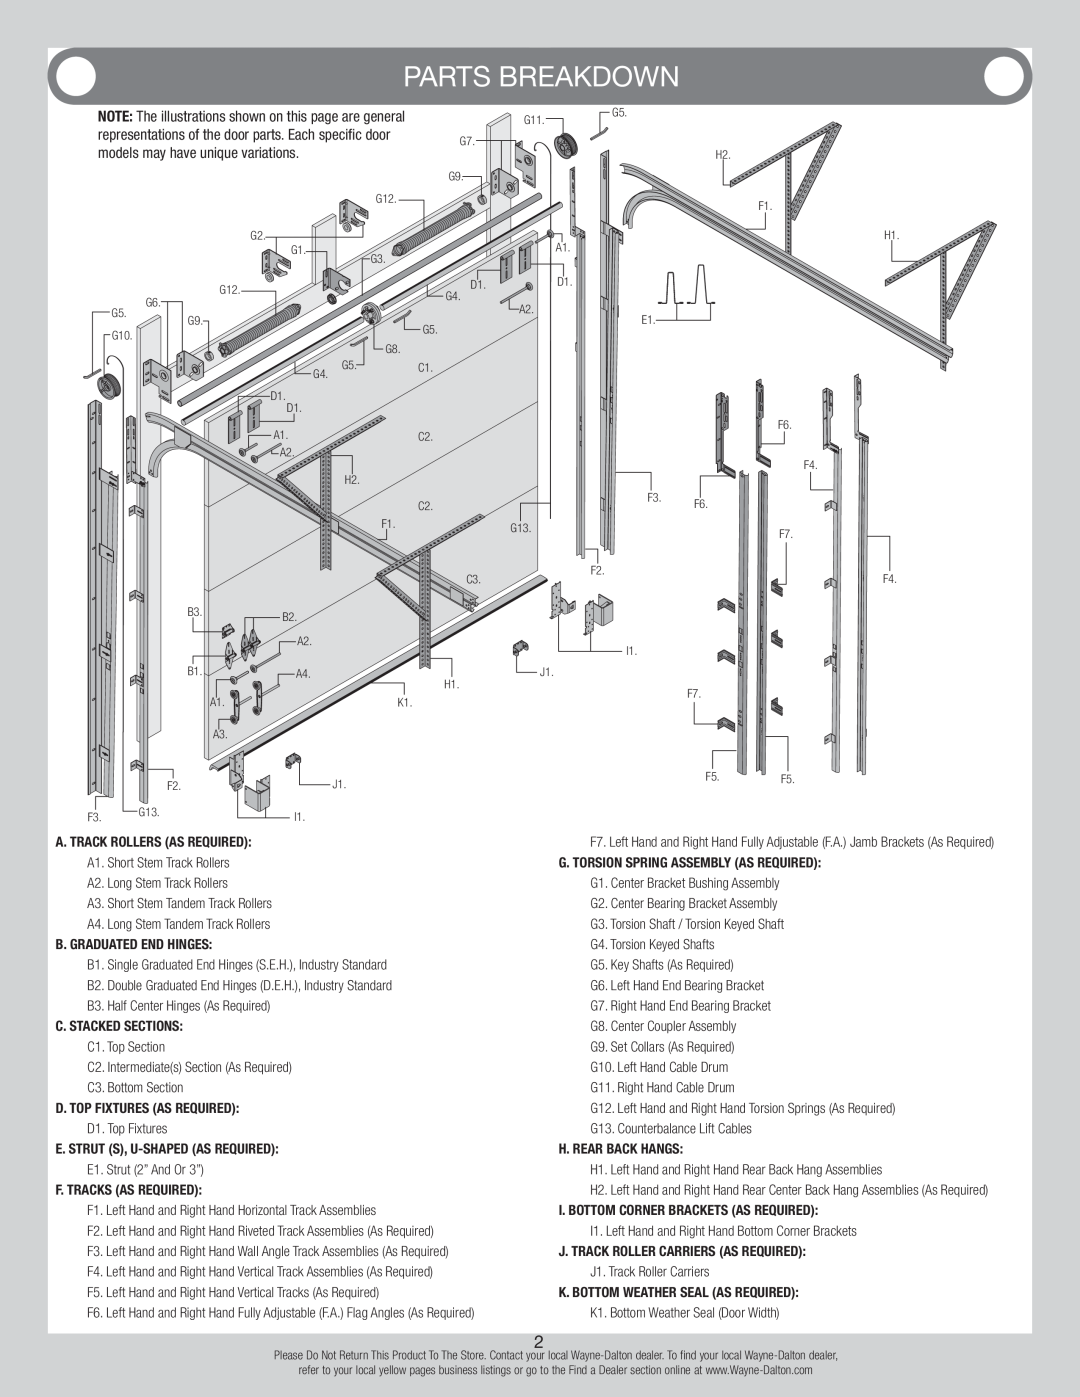 Wayne-Dalton 47, 43, 40, 42, 45 installation instructions Parts Breakdown 